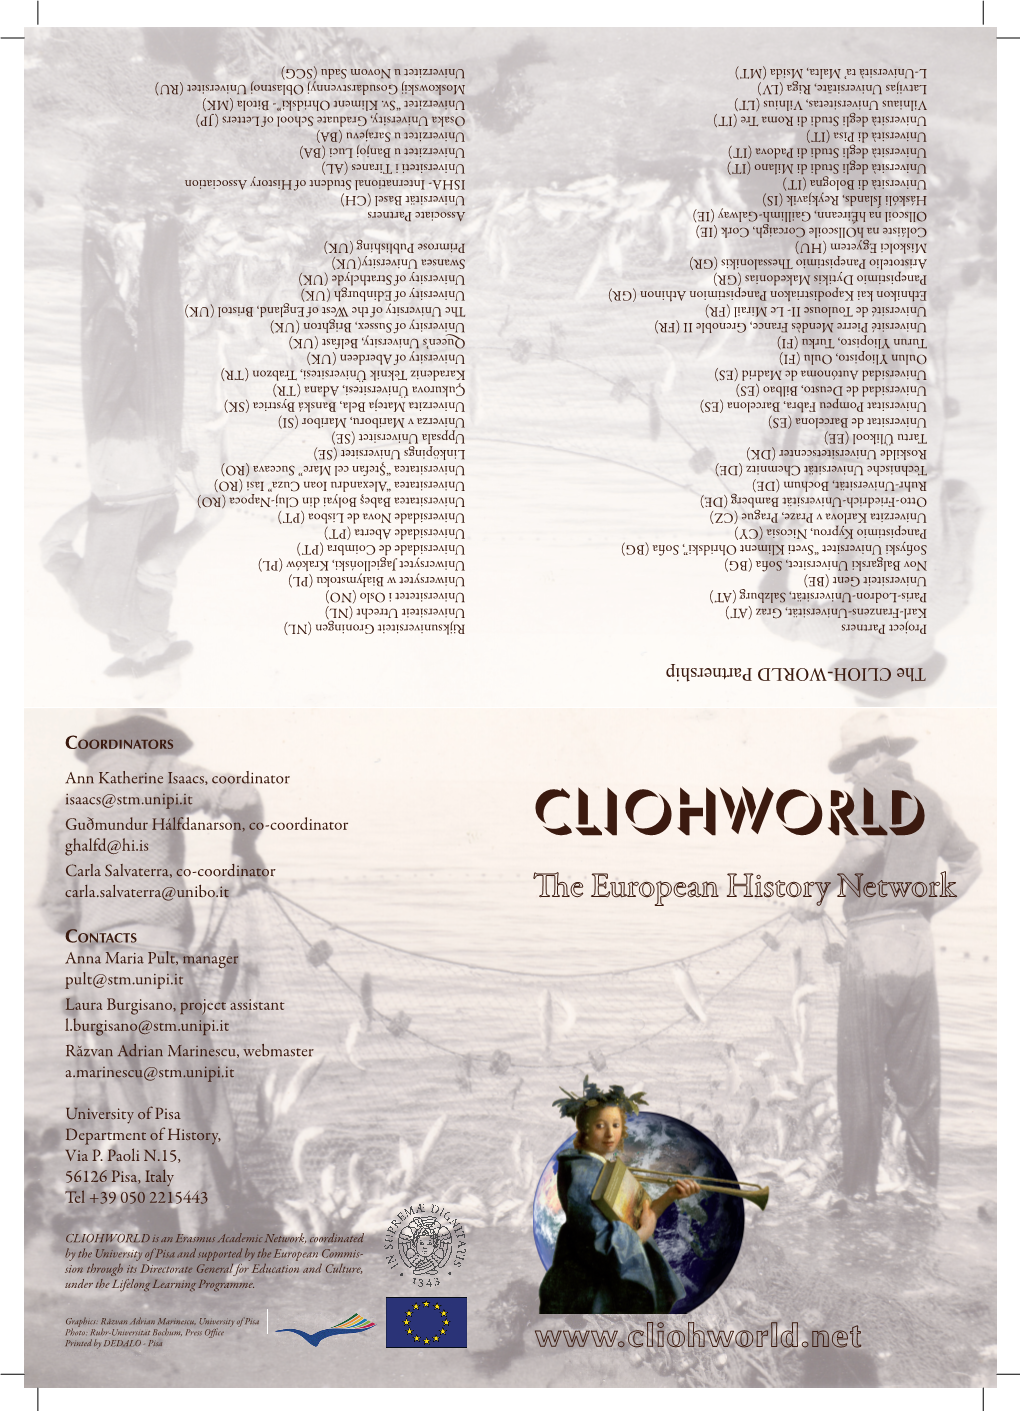 CLIOHWORLD Leaflet